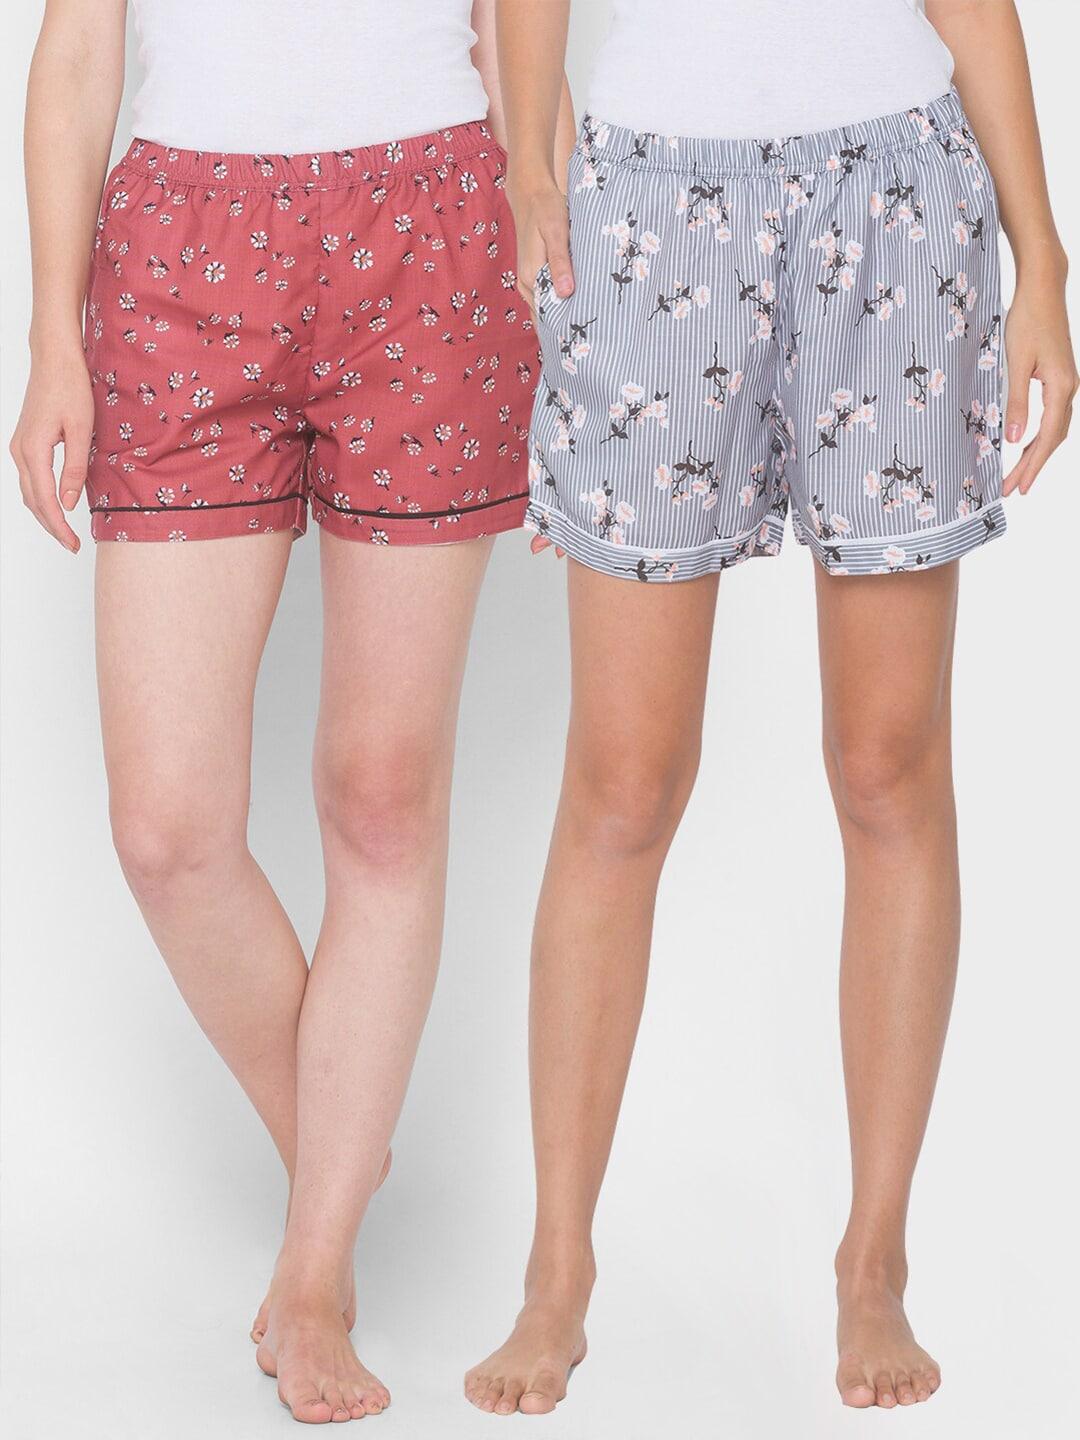 fashionrack-women-set-of-2-printed-lounge-shorts